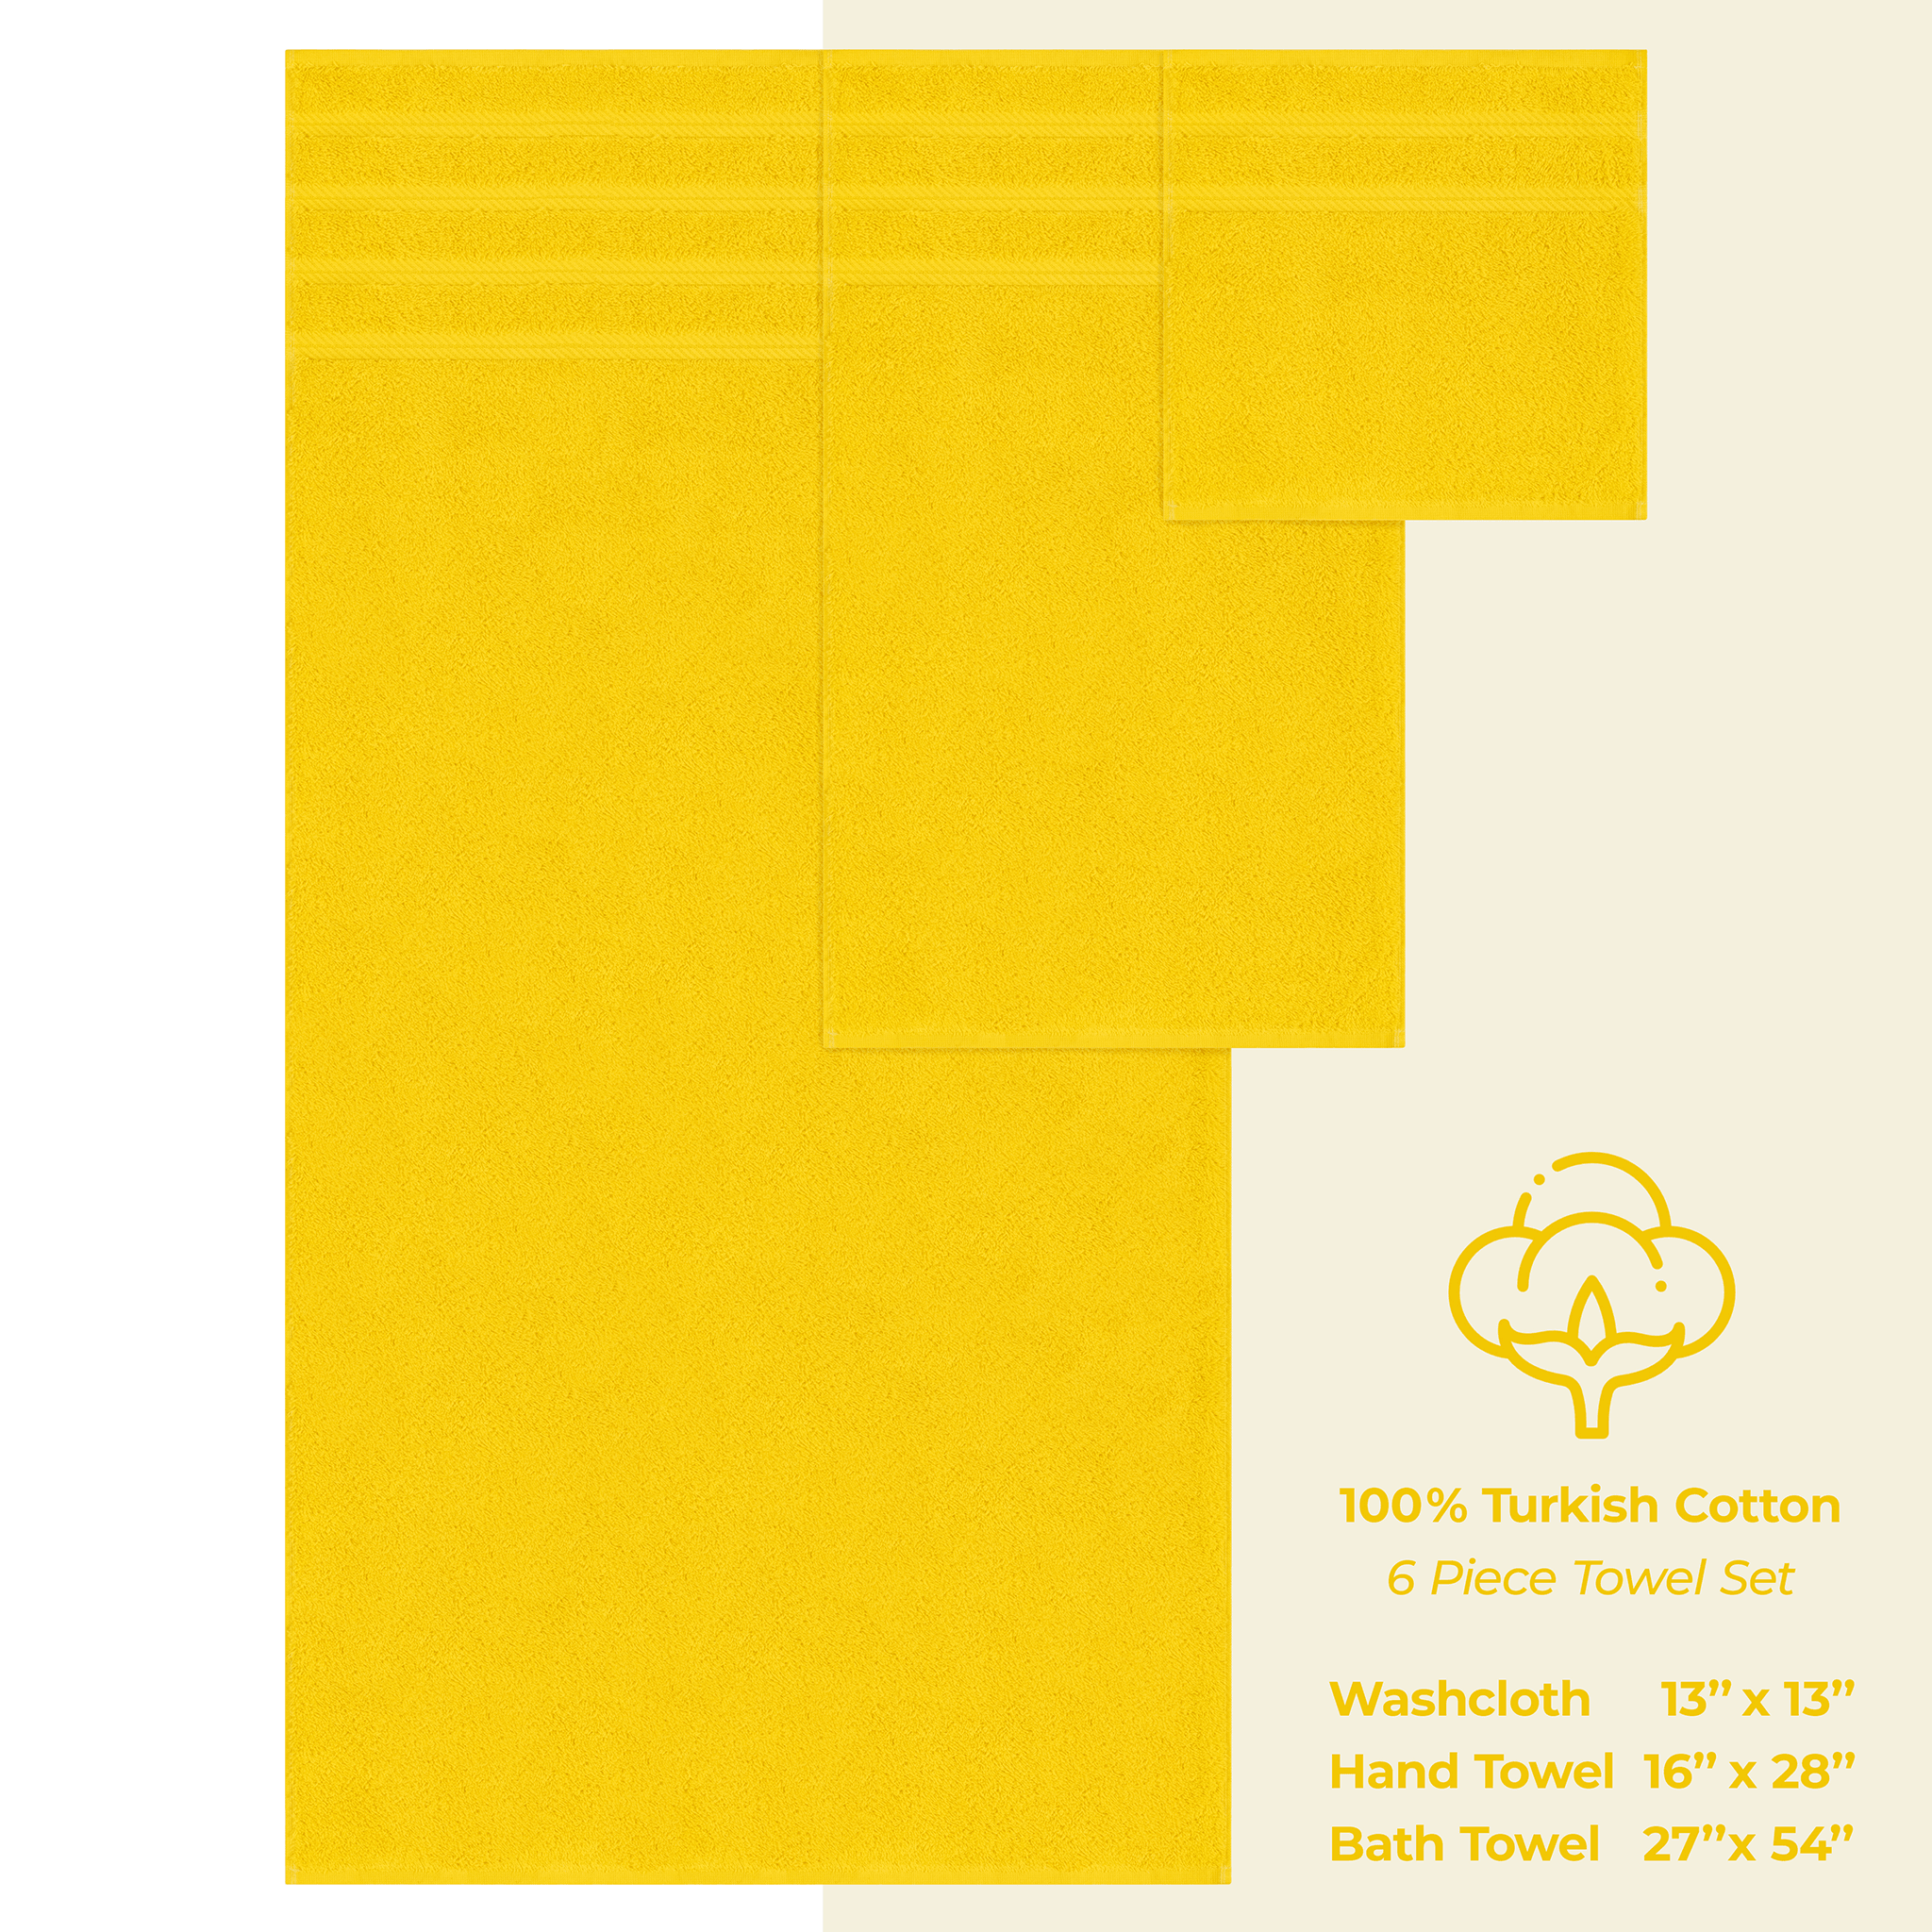 American Soft Linen - 6 Piece Turkish Cotton Bath Towel Set - Yellow - 4